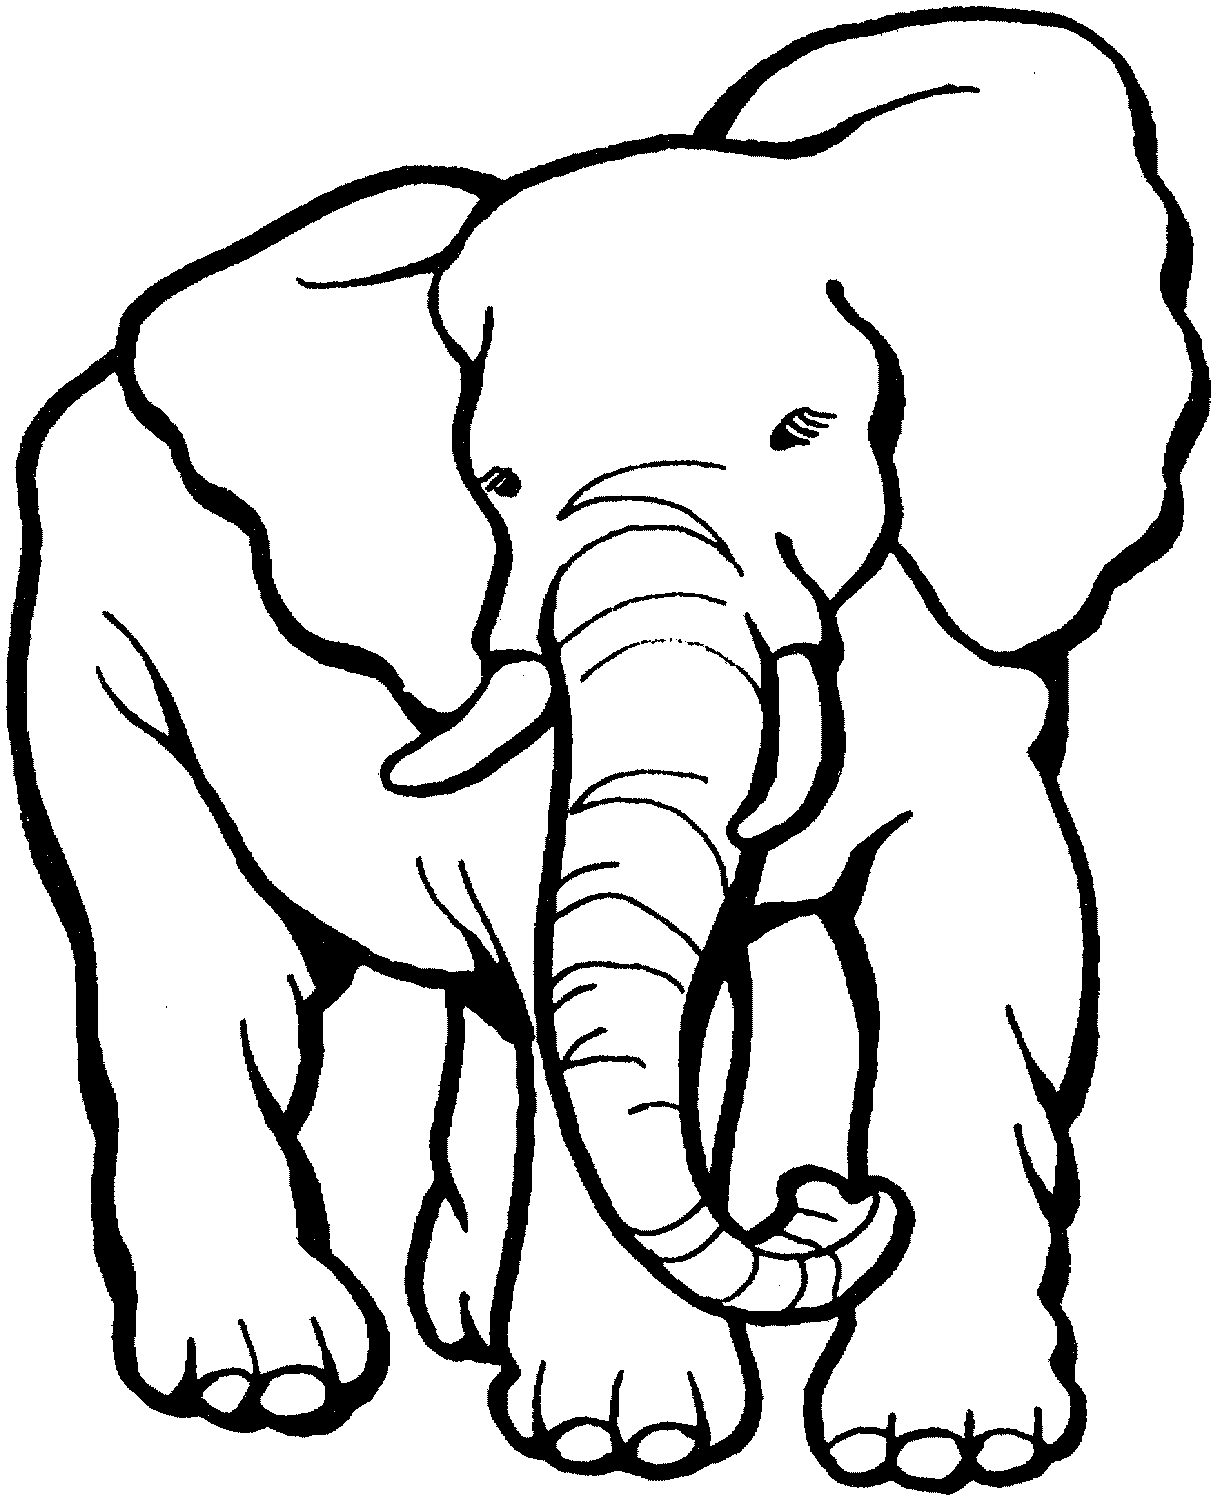 Line Drawing Elephant - ClipArt Best - ClipArt Best ...